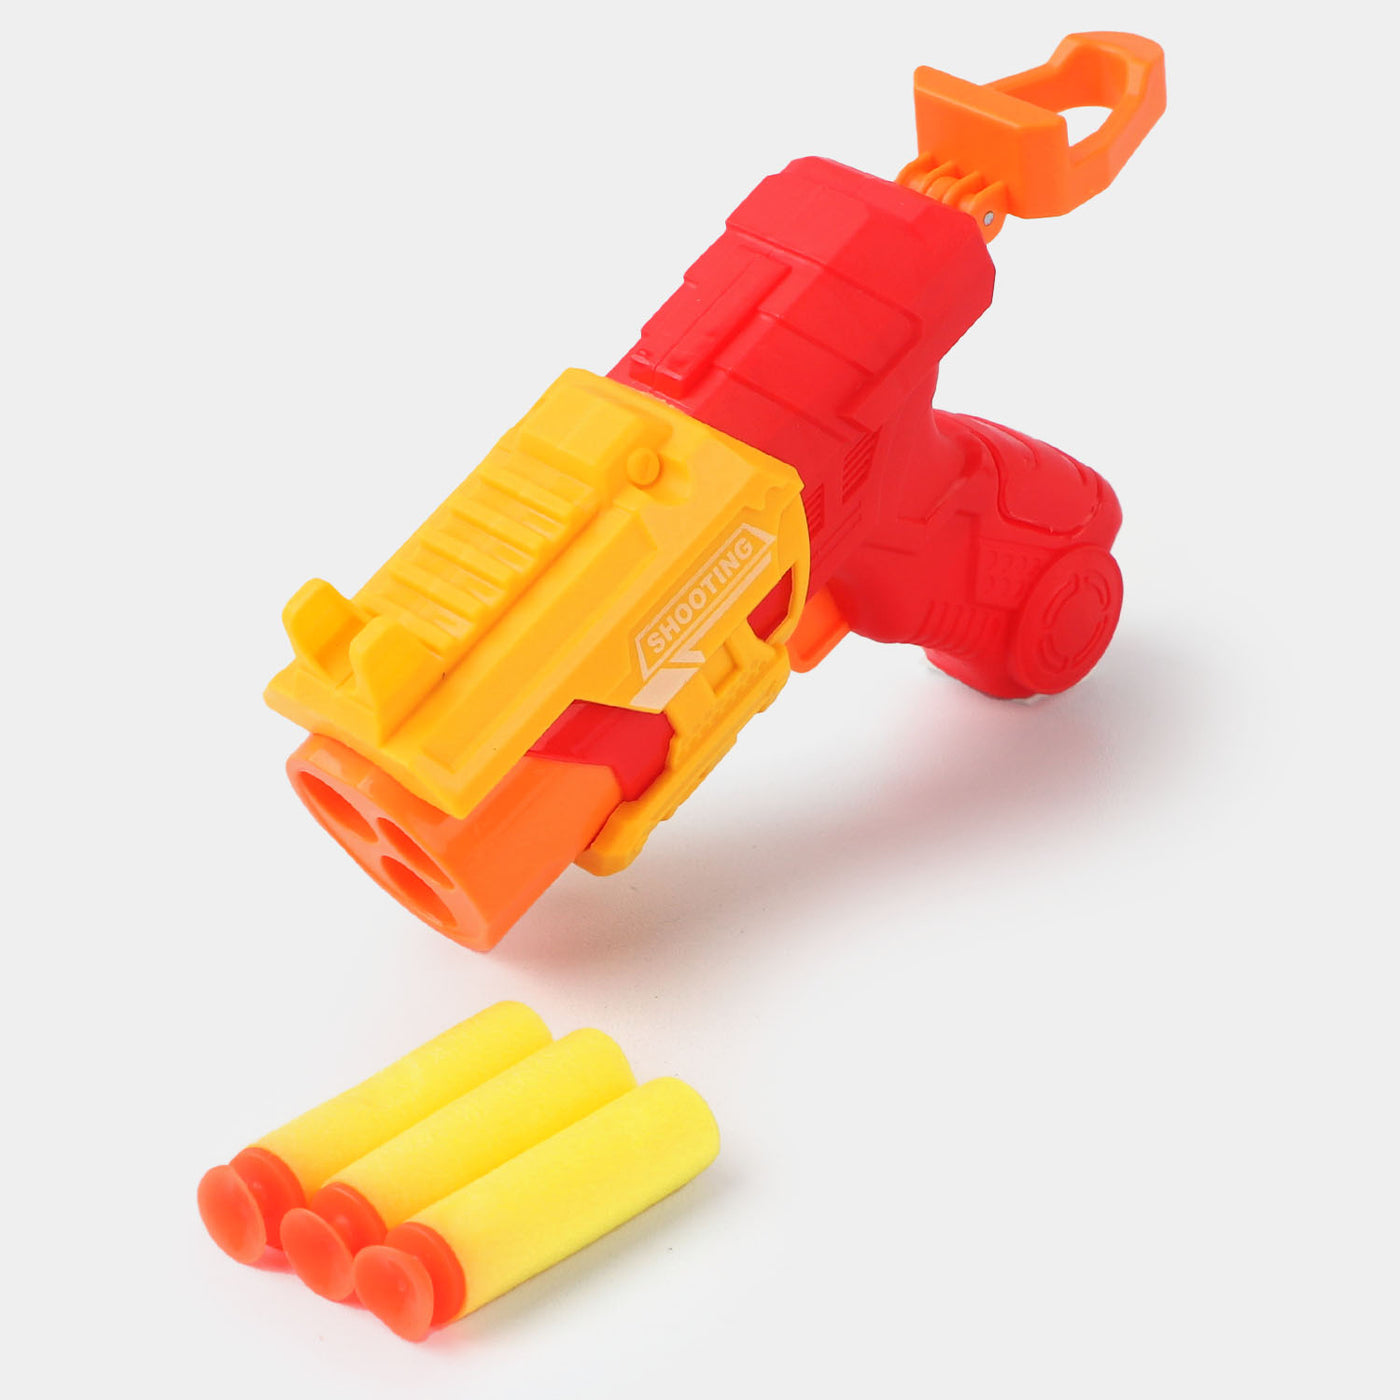 Soft Bullet Gun + Action Figure For Kids